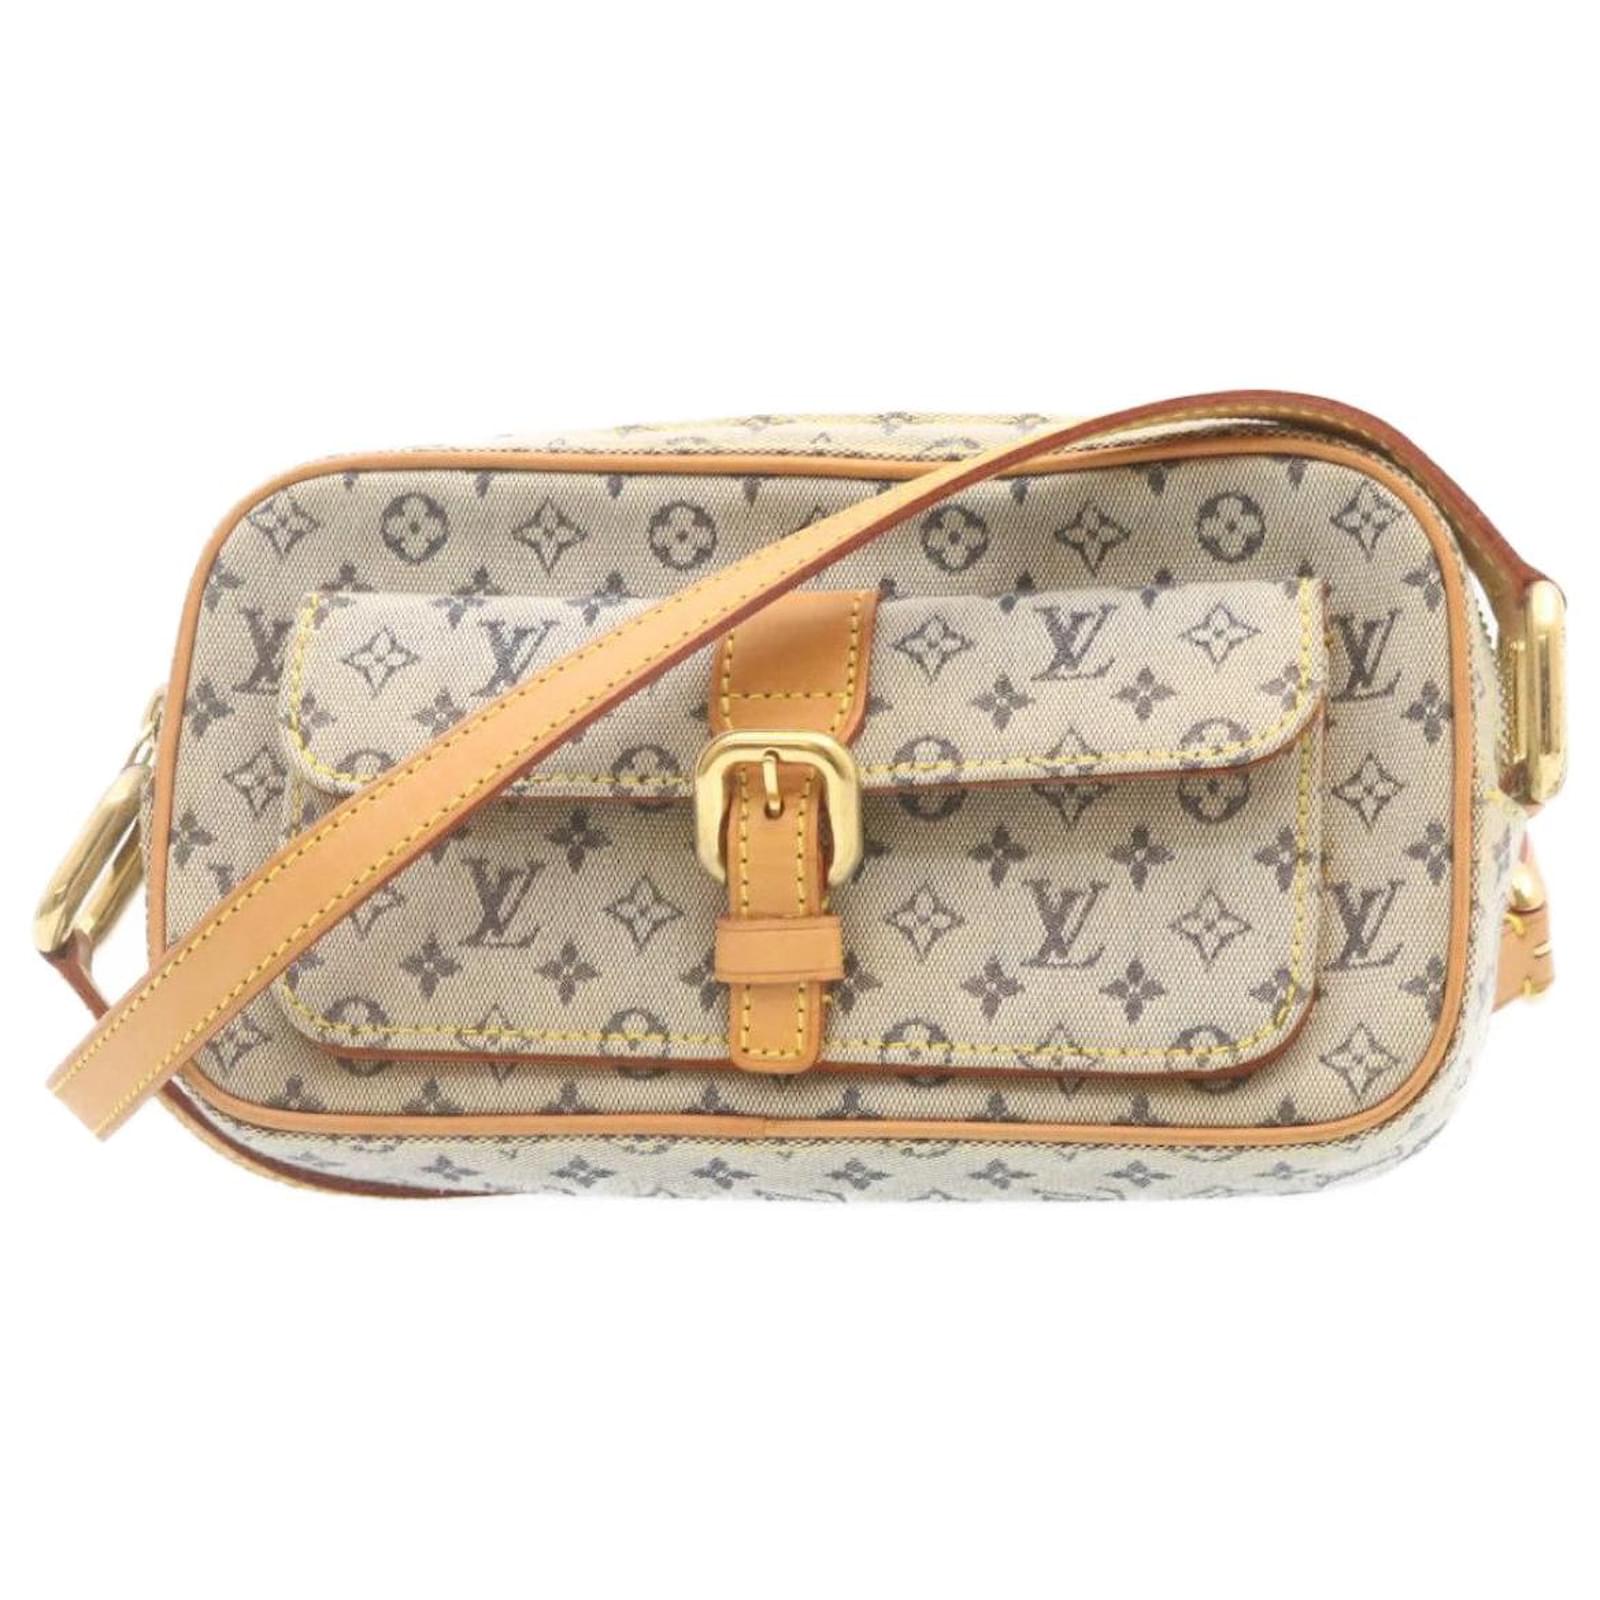 New Louis Vuitton Juliette bag